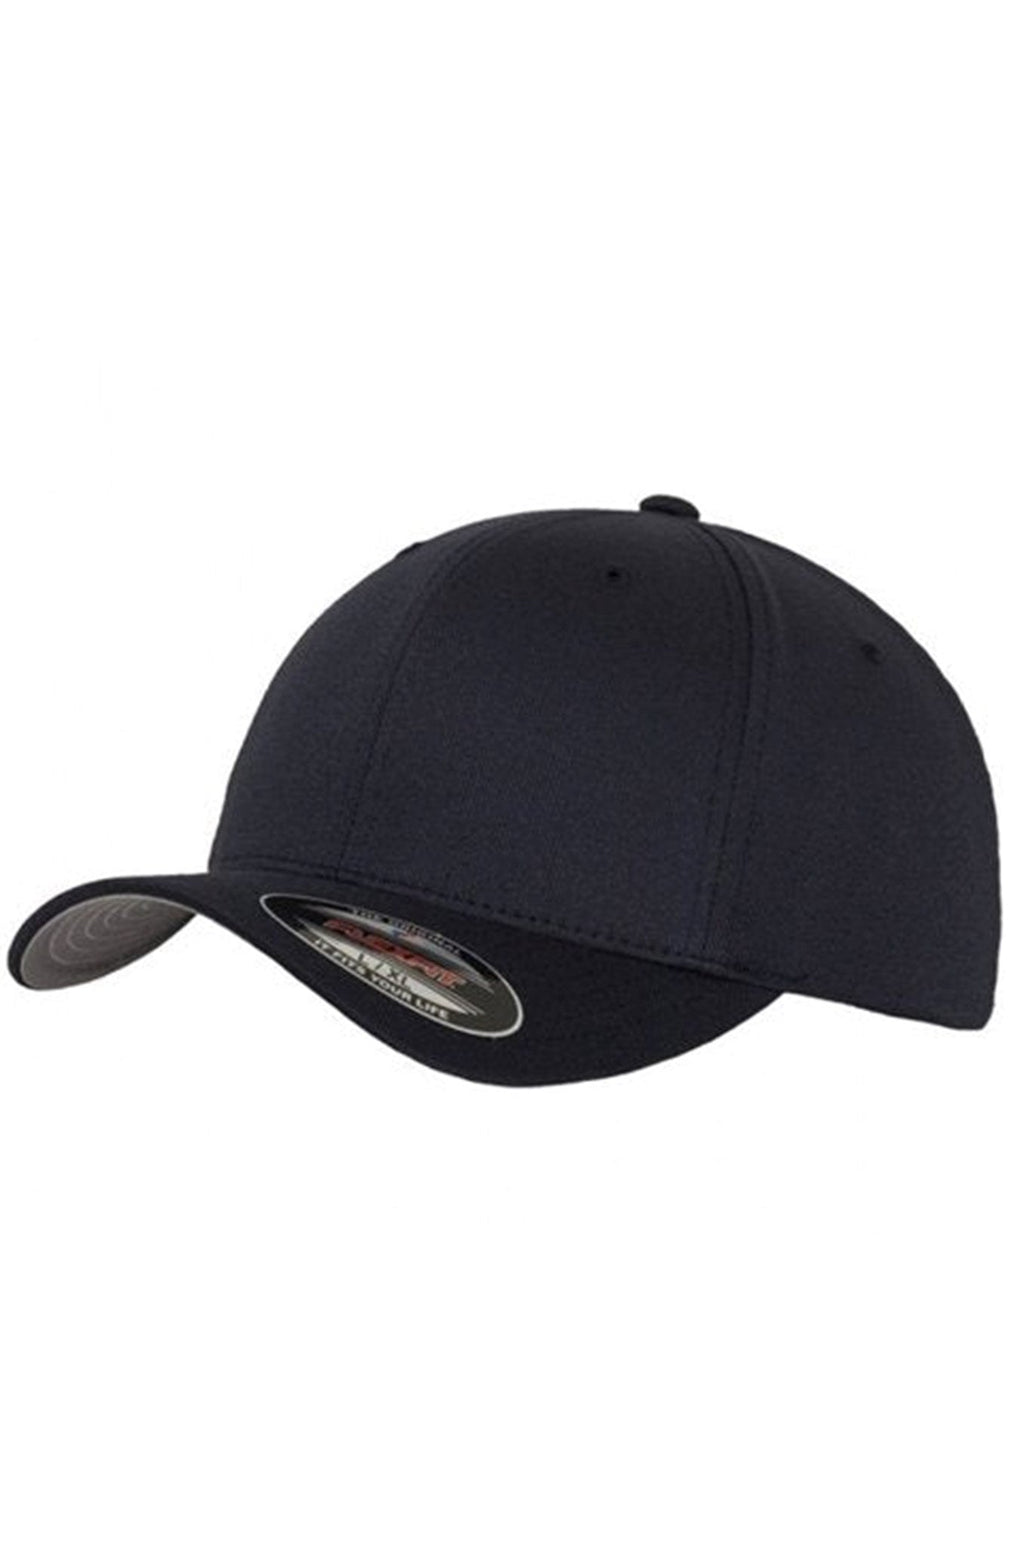 „Flexfit“ originalus beisbolo kepuraitė - tamsiai mėlyna spalva